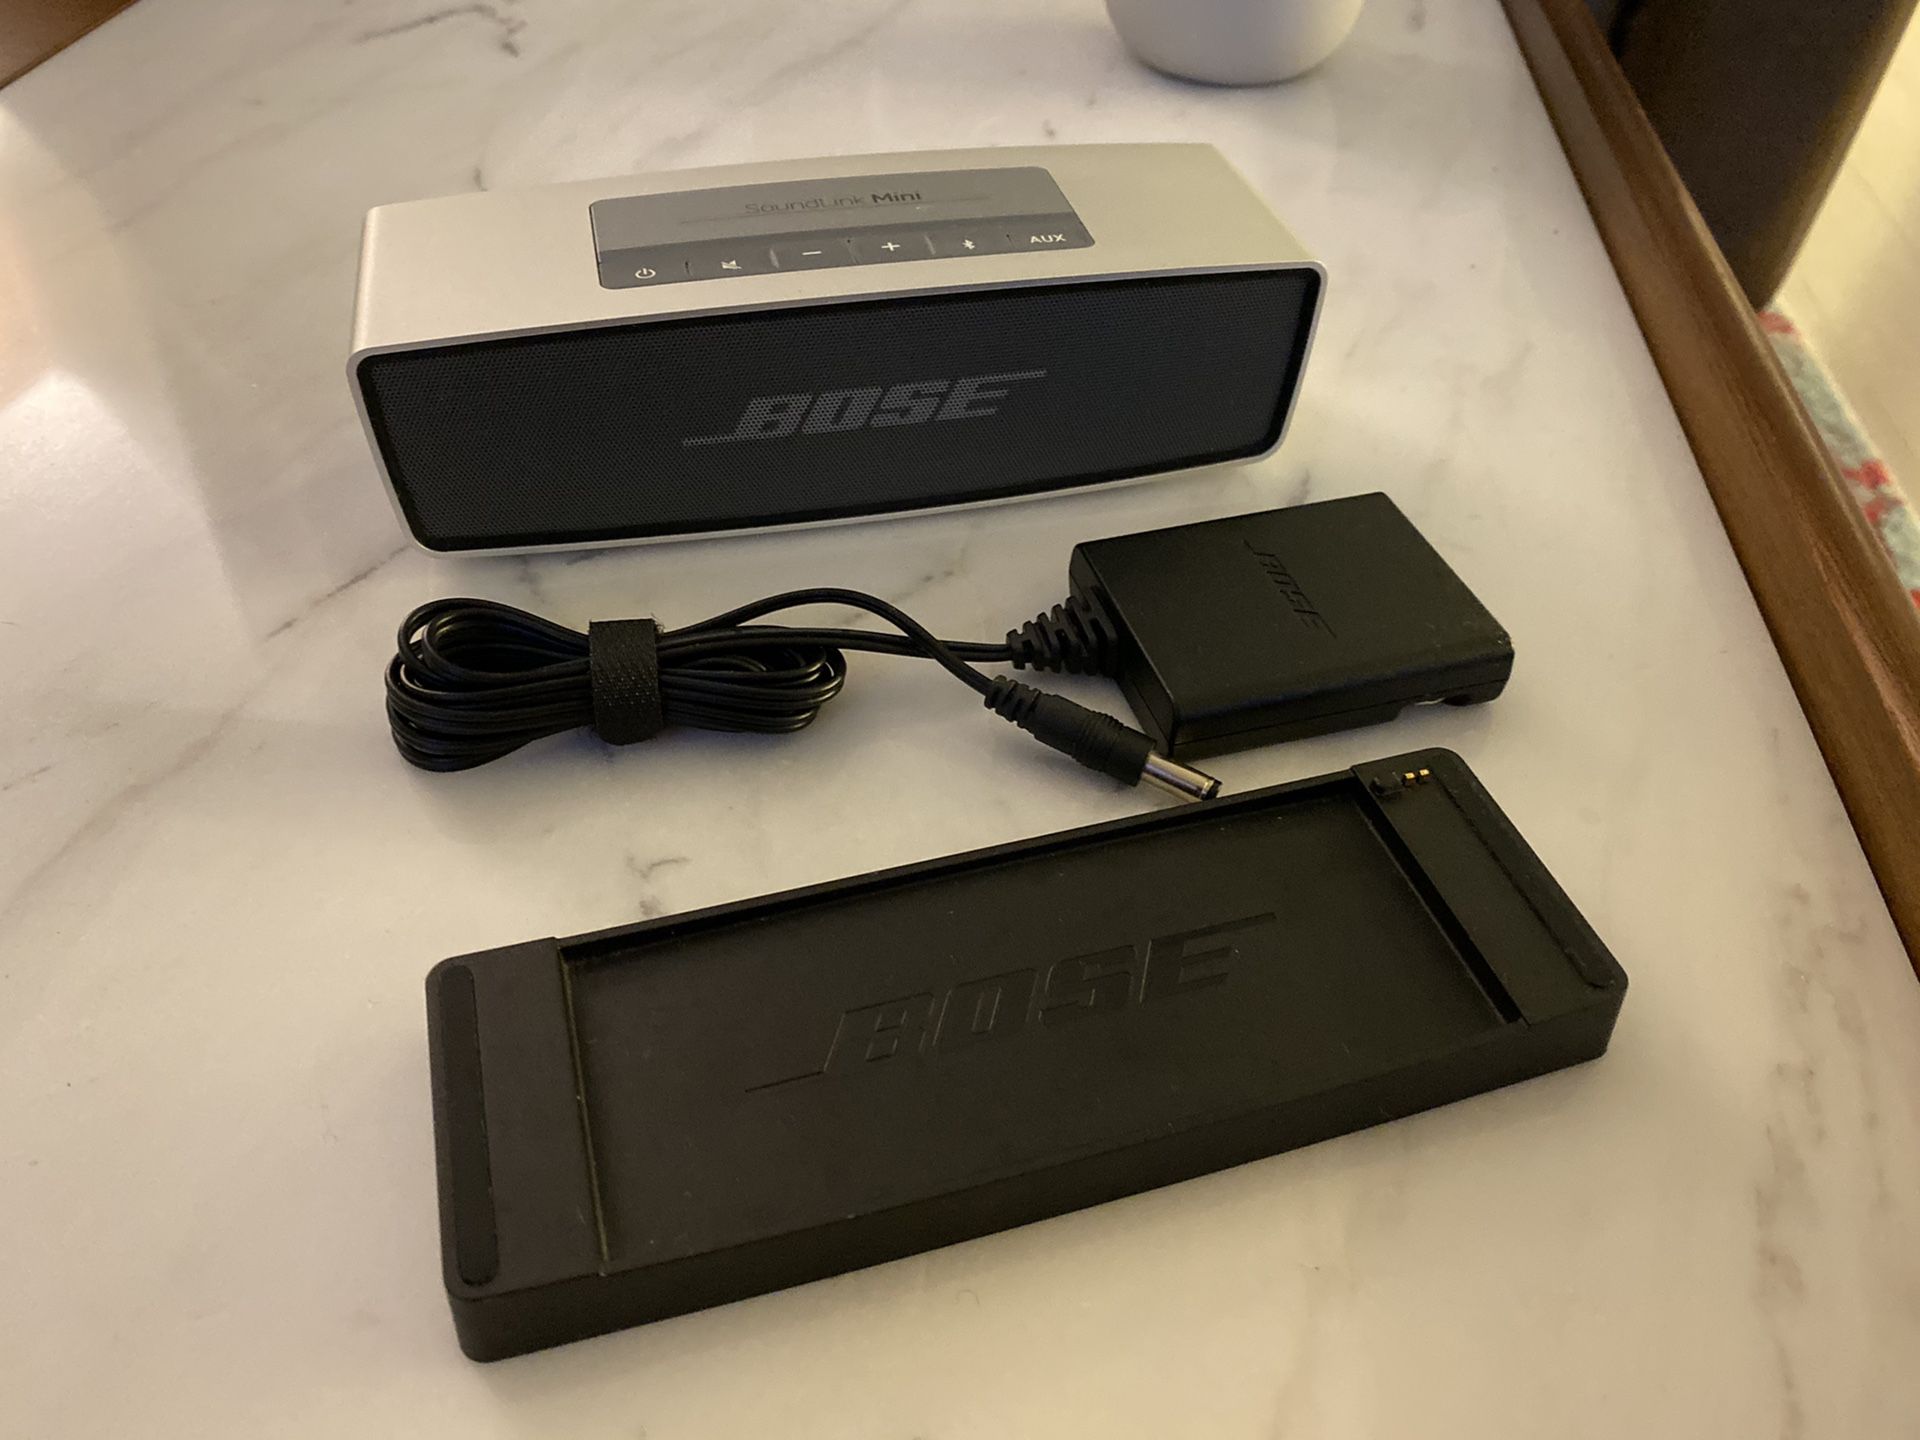 Bose SoundLink mini Bluetooth speaker